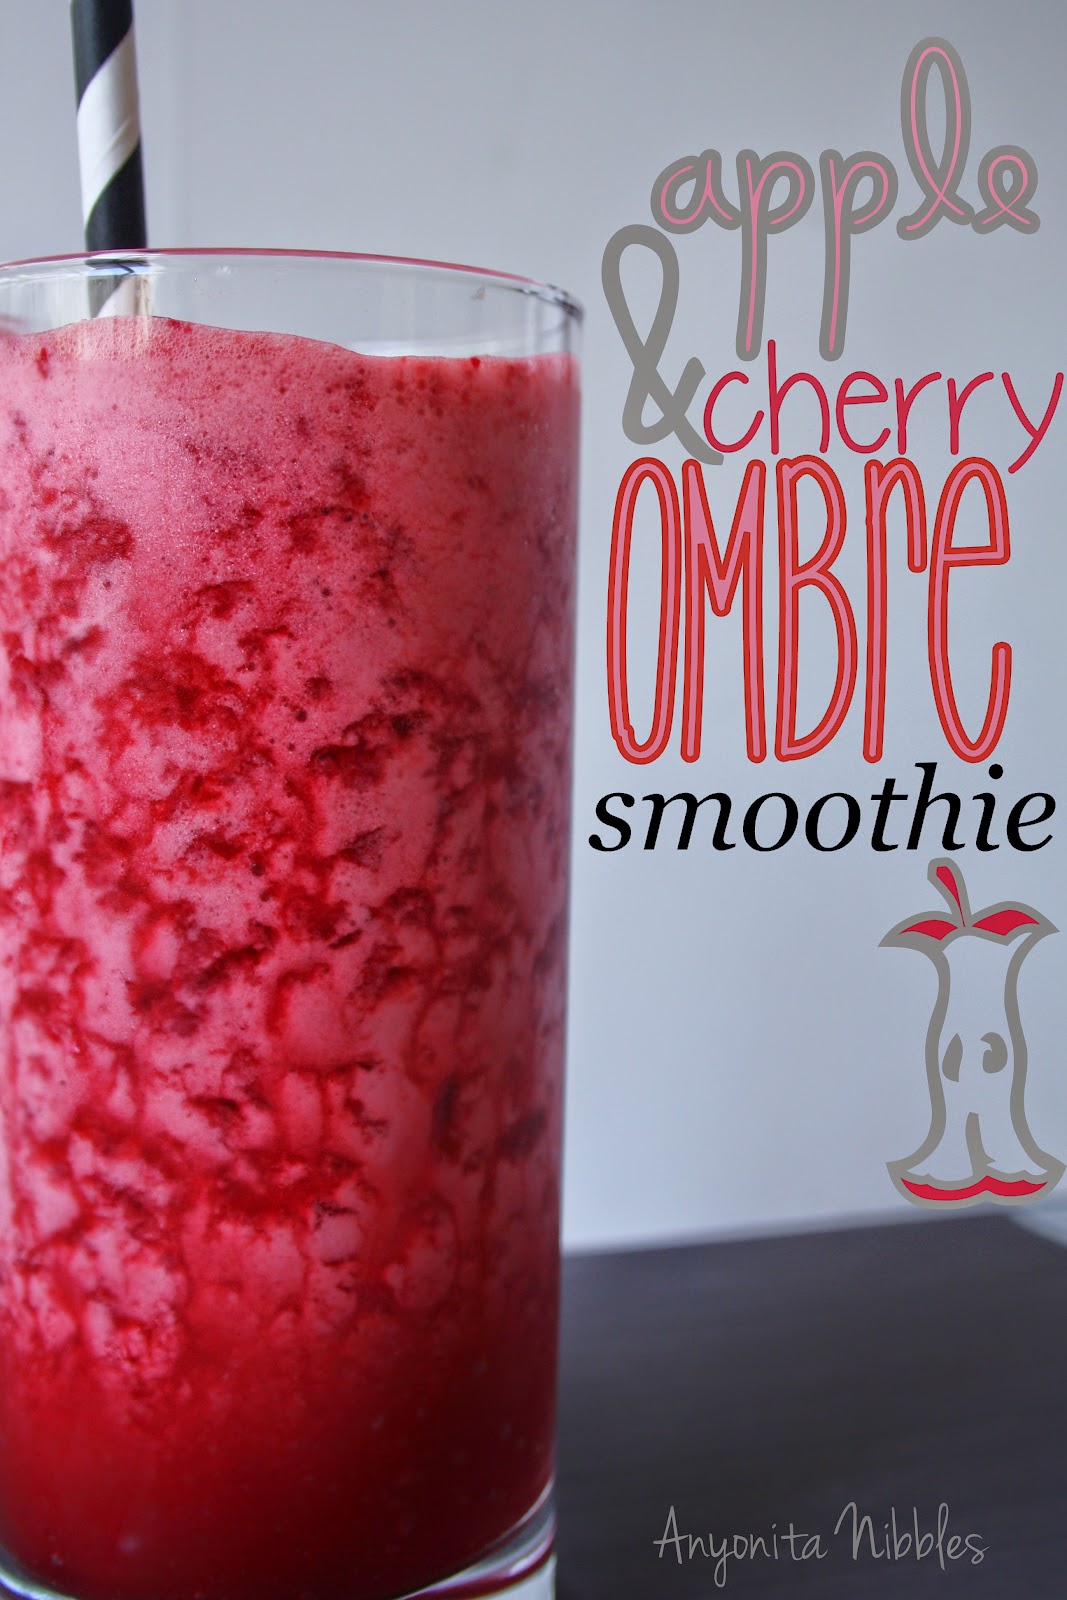 maker good guys yogurt Smoothie Nibbles: Ombre & Anyonita Skinny Cherry Apple